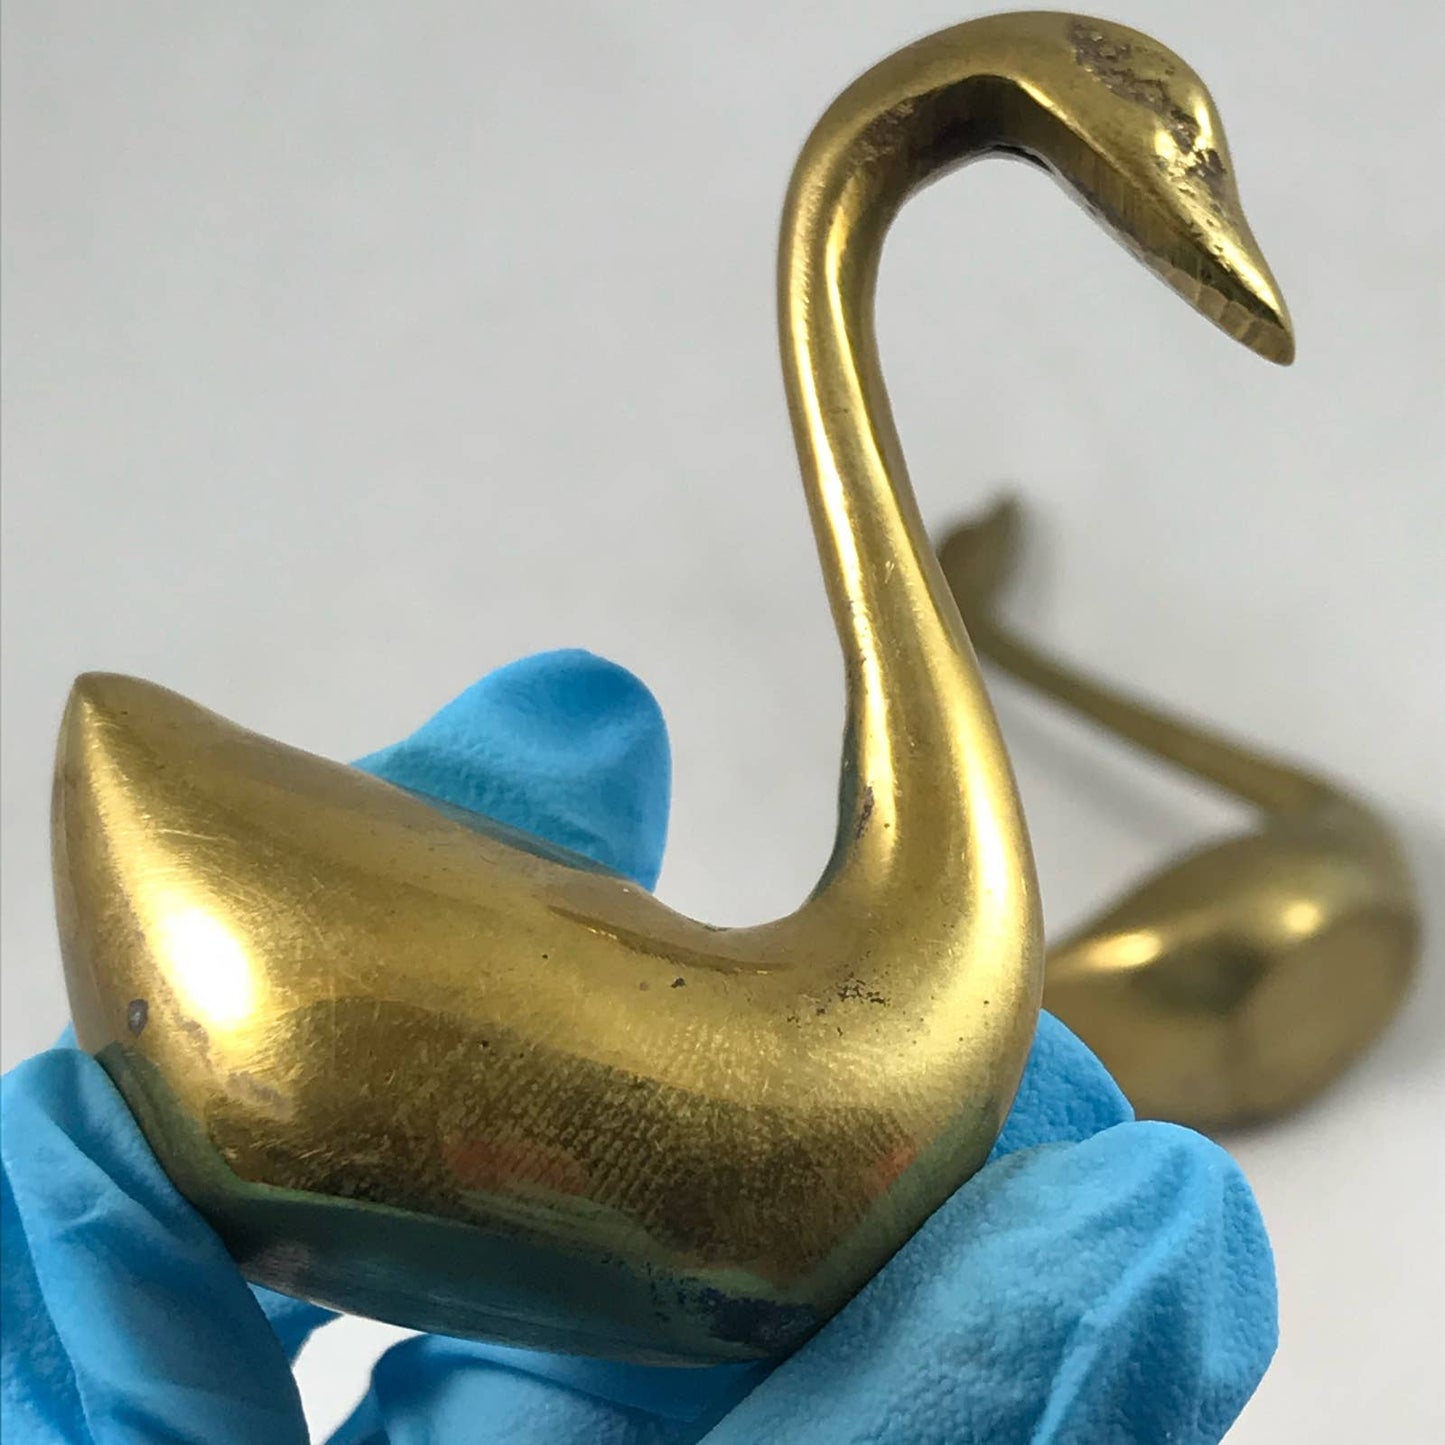 Vintage Brass Swan Pair Sleek Mid-Century Modern Home Decor Gold Birds Set of 2